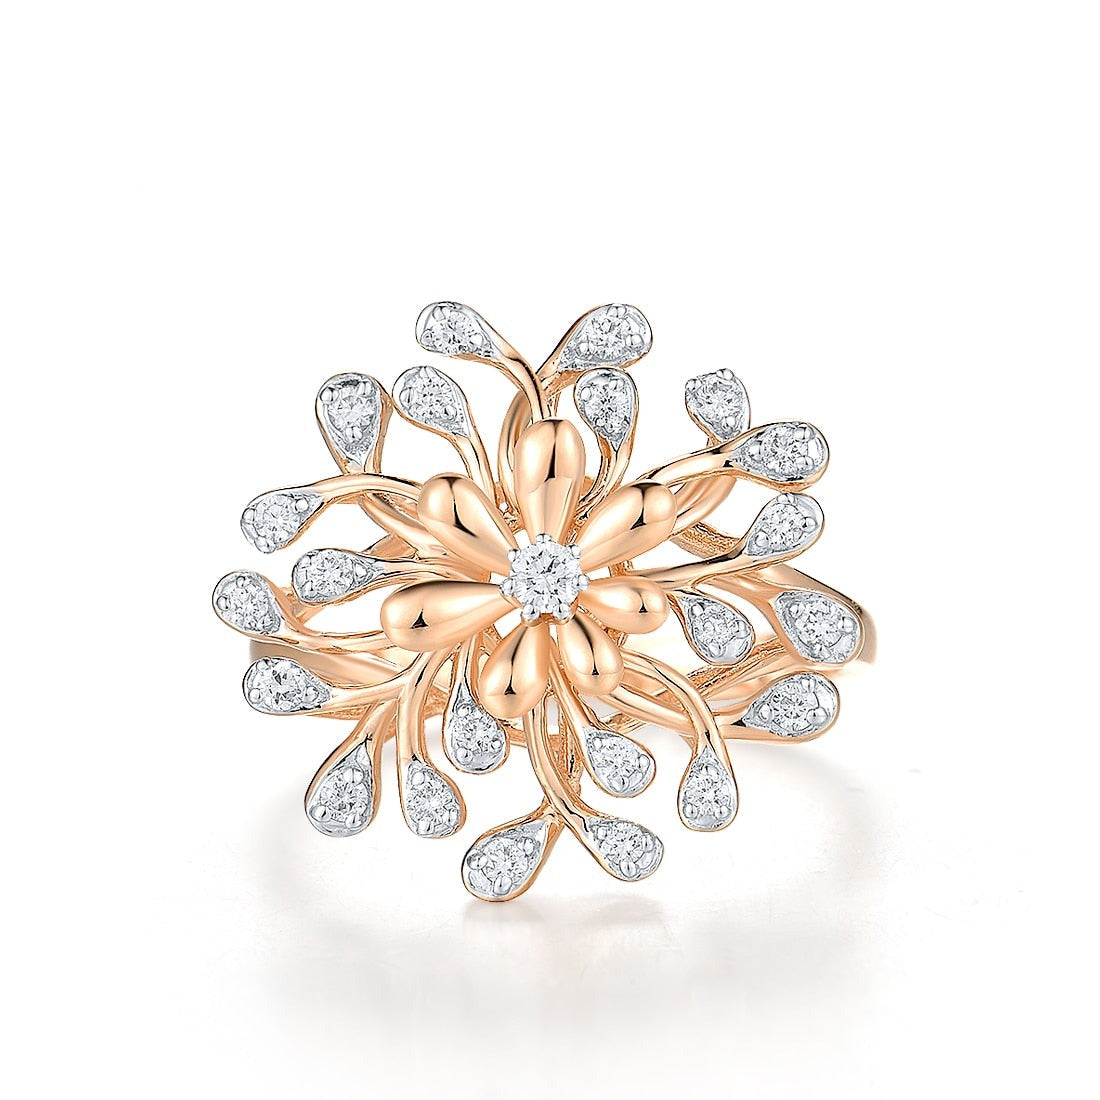 Luxury Natural Diamond Engagement Rings. 14K Rose Gold.